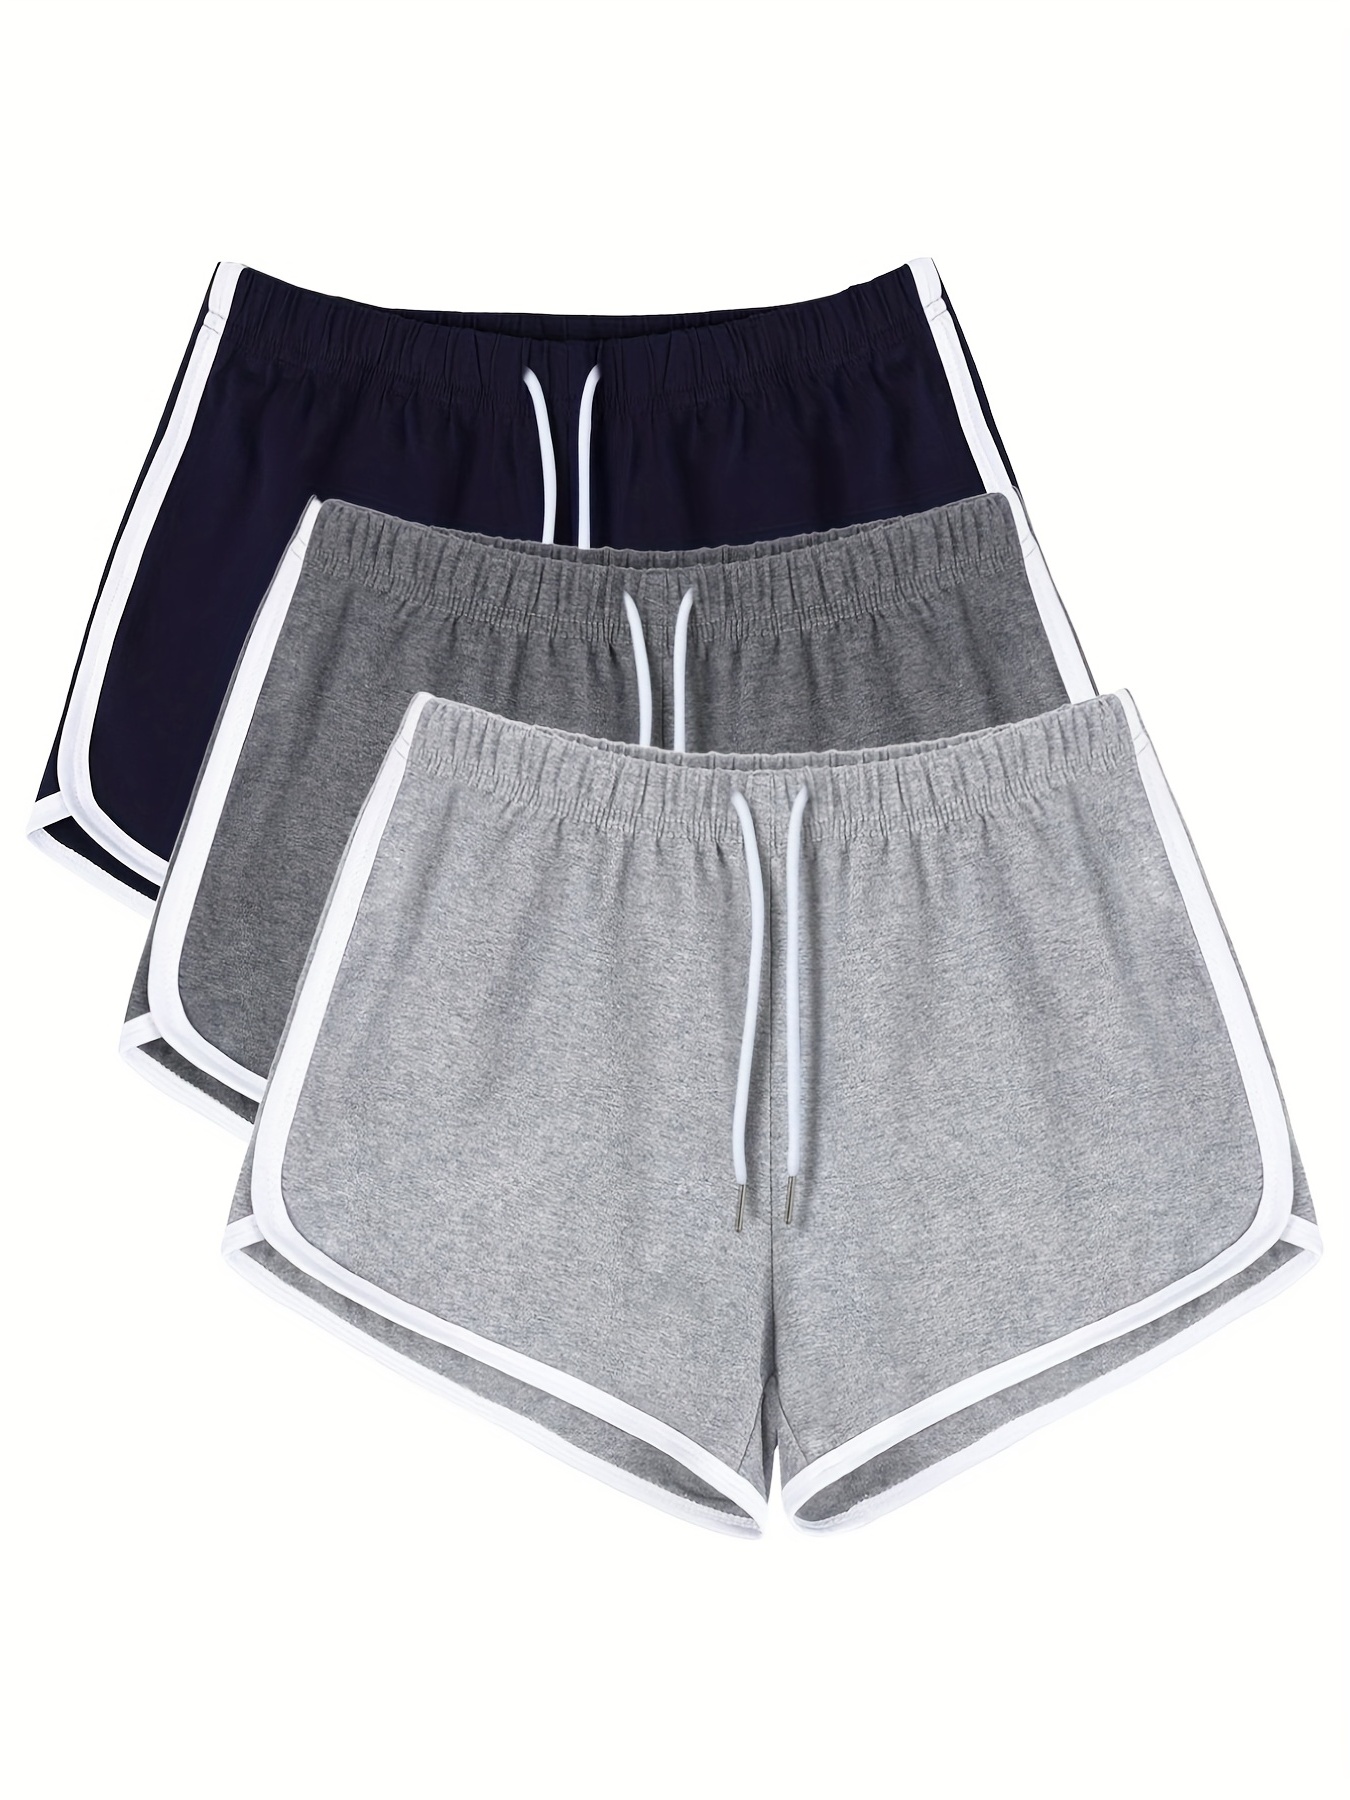 Paragon Fitwear Athletic Running Shorts Lined Womens Medium Gray Zip Pocket  H5